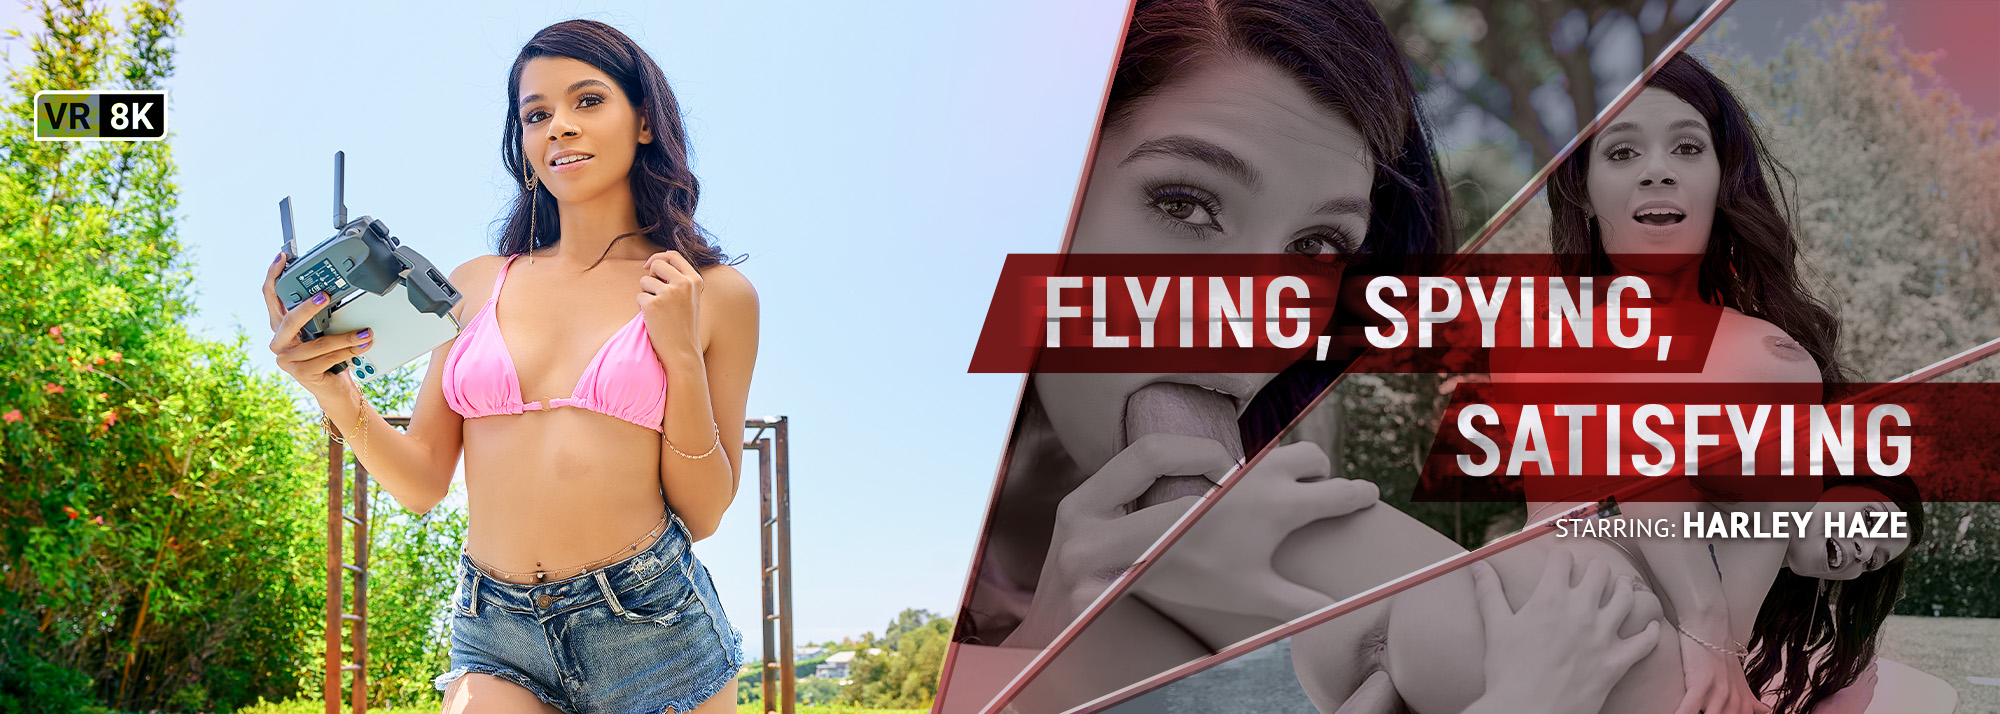 Flying, Spying, Satisfying - VR Porn Video, Starring: Harley Haze VR